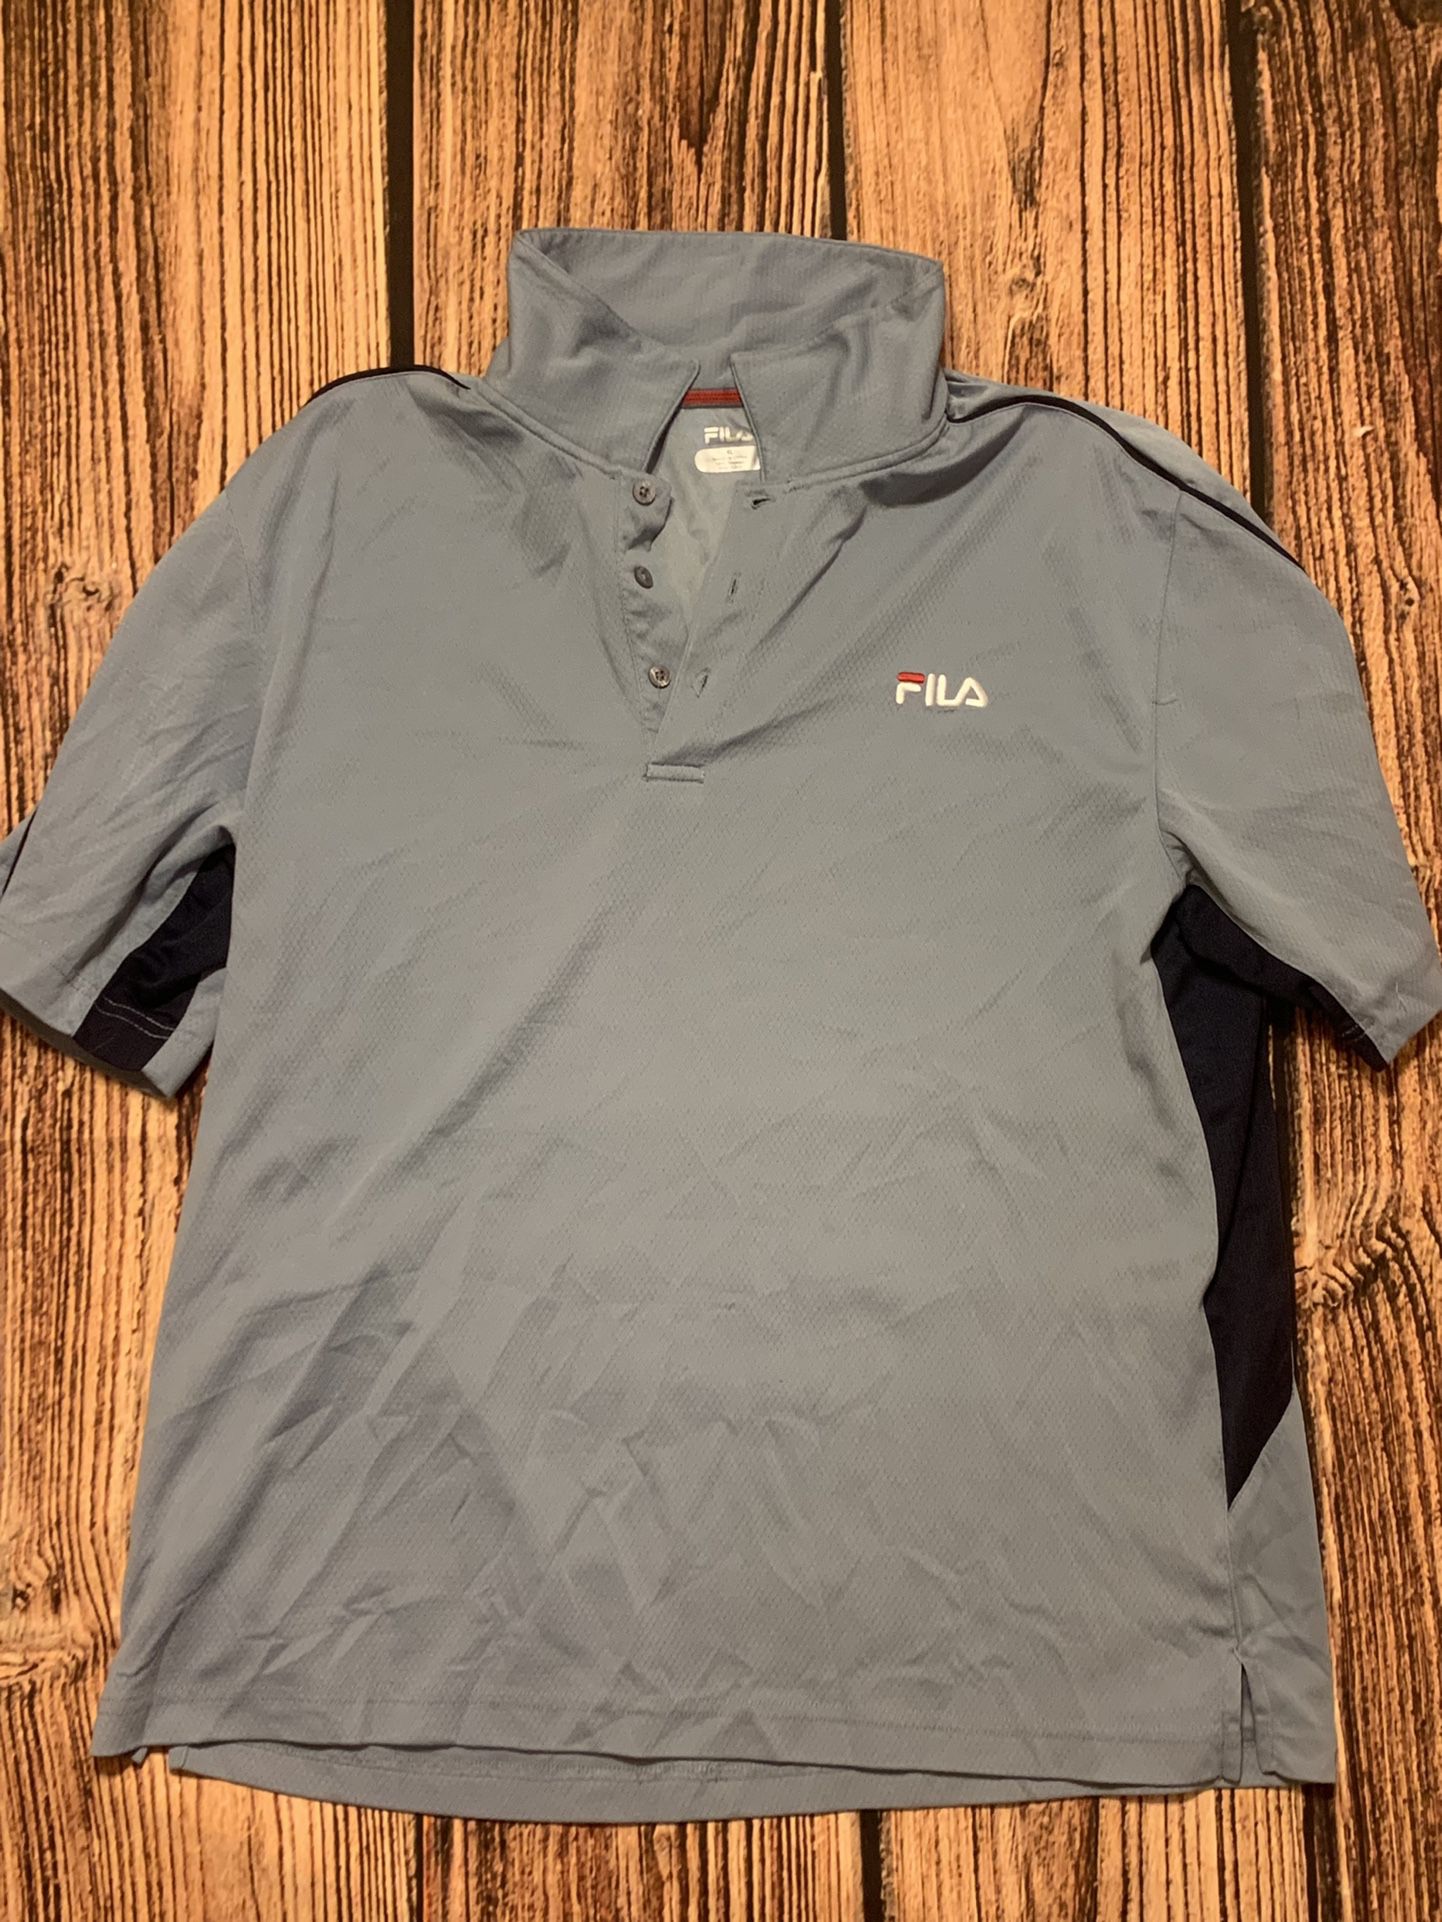 Men’s FLIA Polo shirt XL